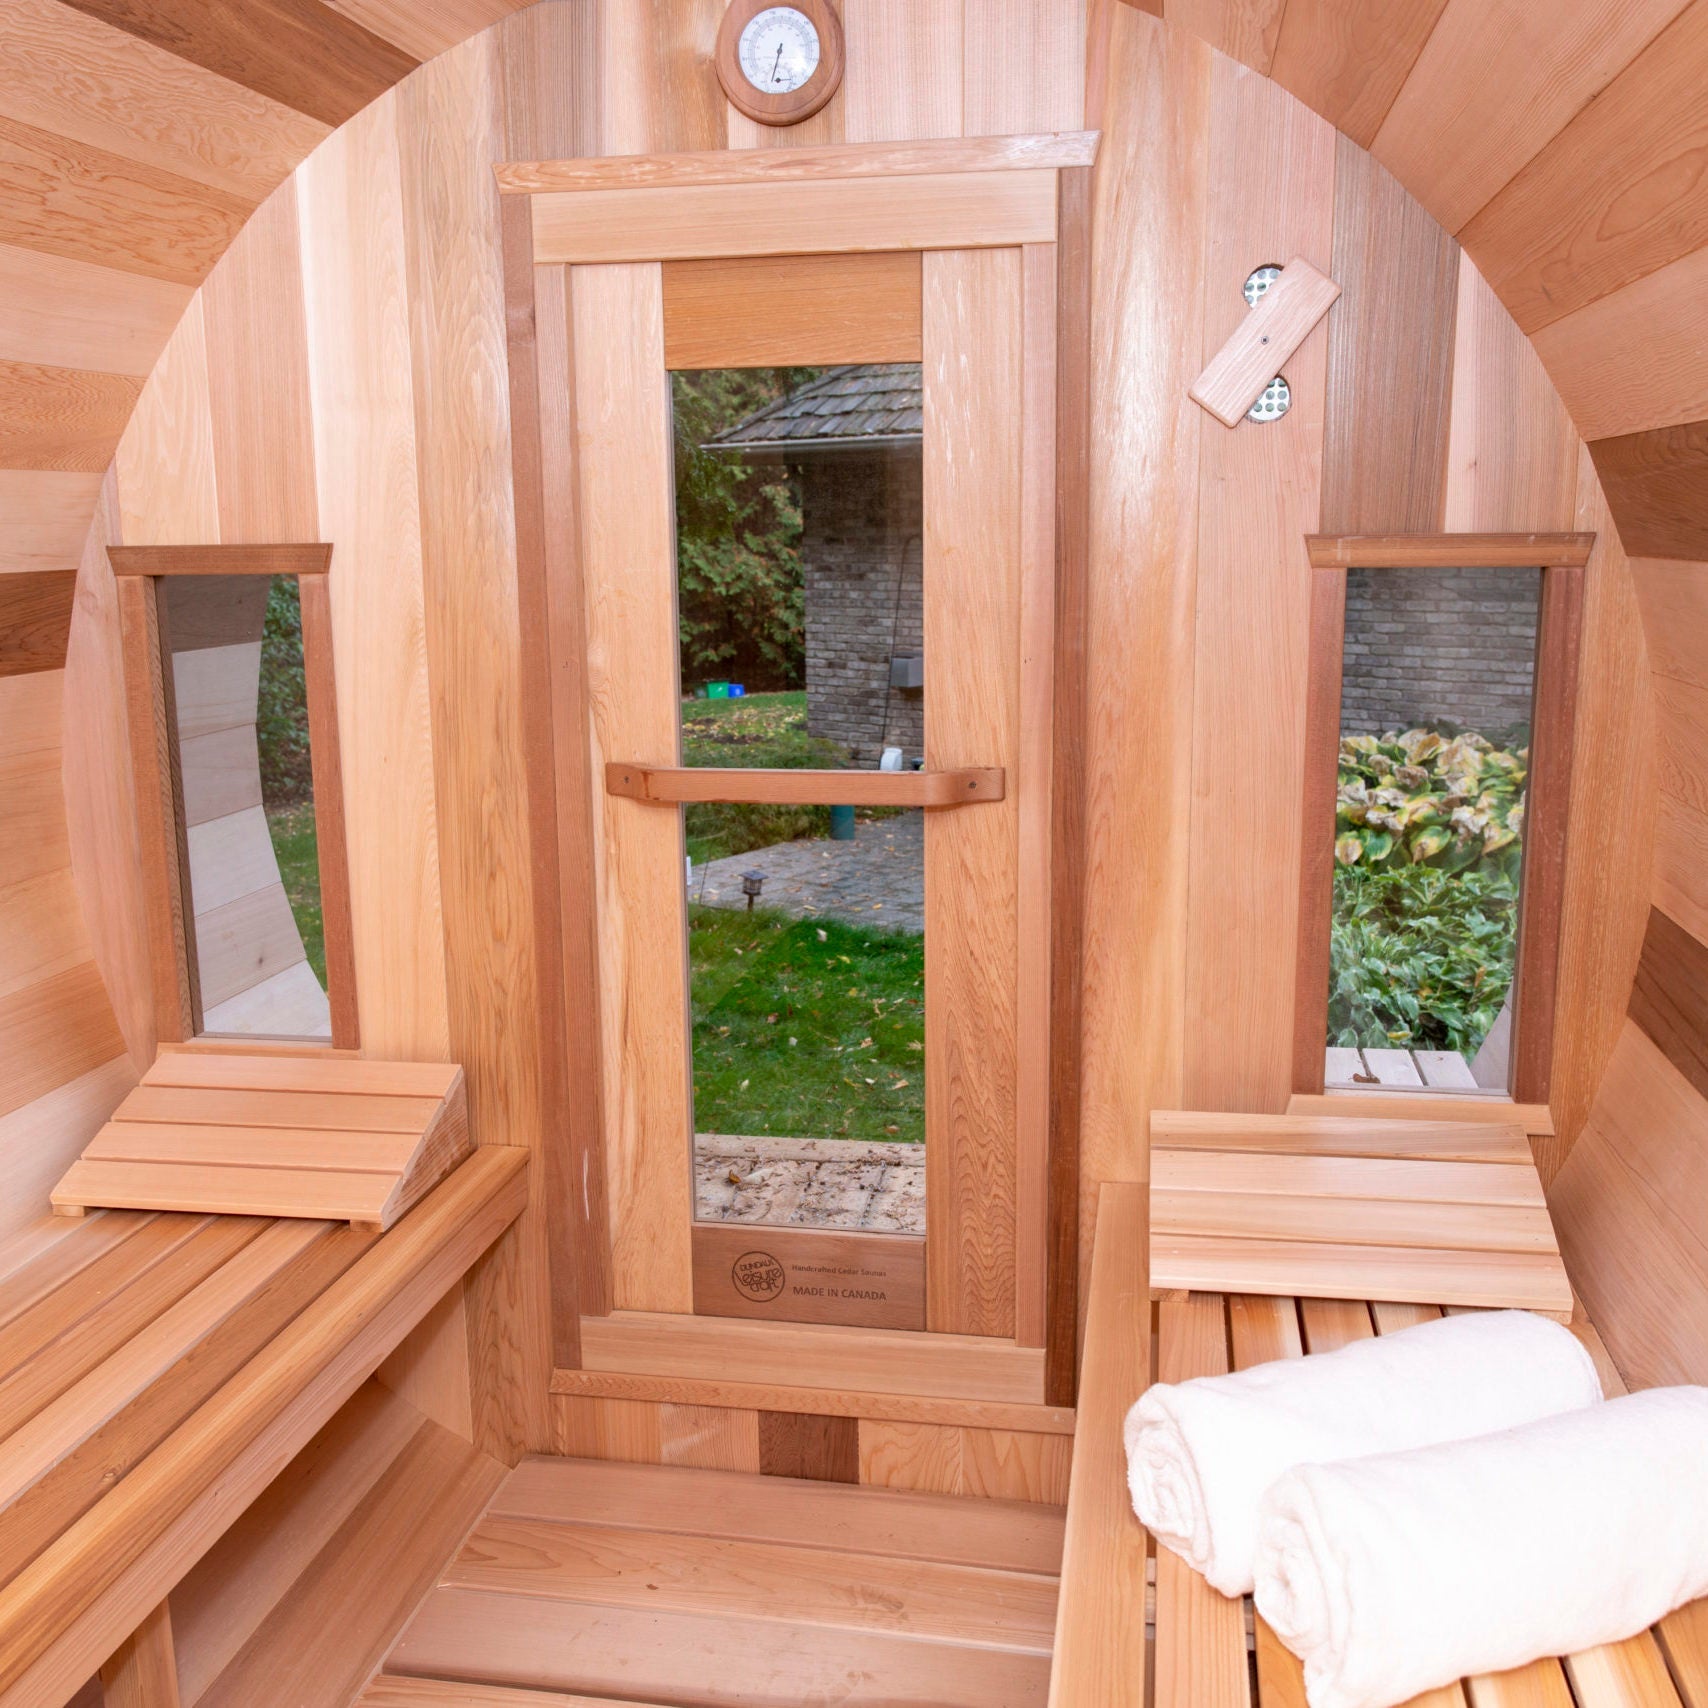 A Dundalk Canadian Timber Tranquility Sauna made of Canadian Cedar timber, manufactured by Dundalk Leisurecraft.